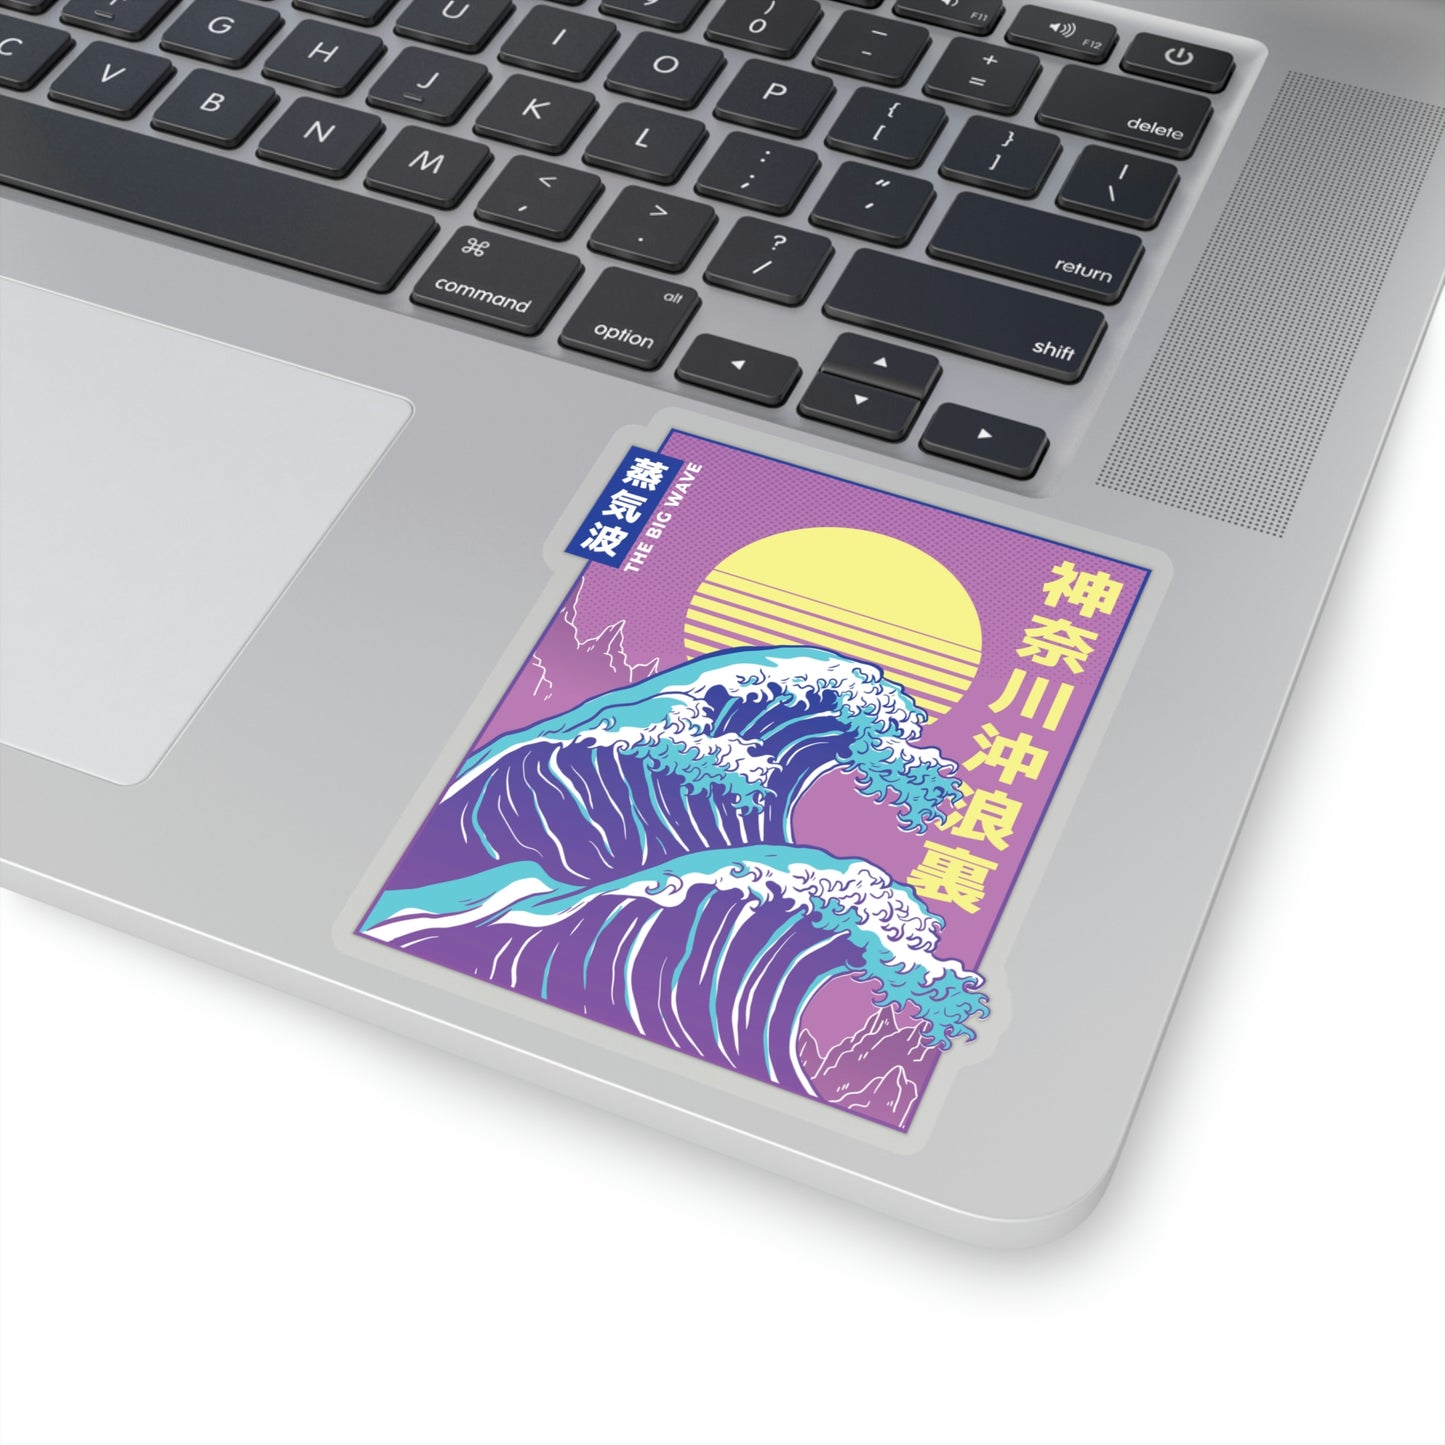 Japanese Aesthetic Vaporwave The Great Wave off Kanagawa Sticker